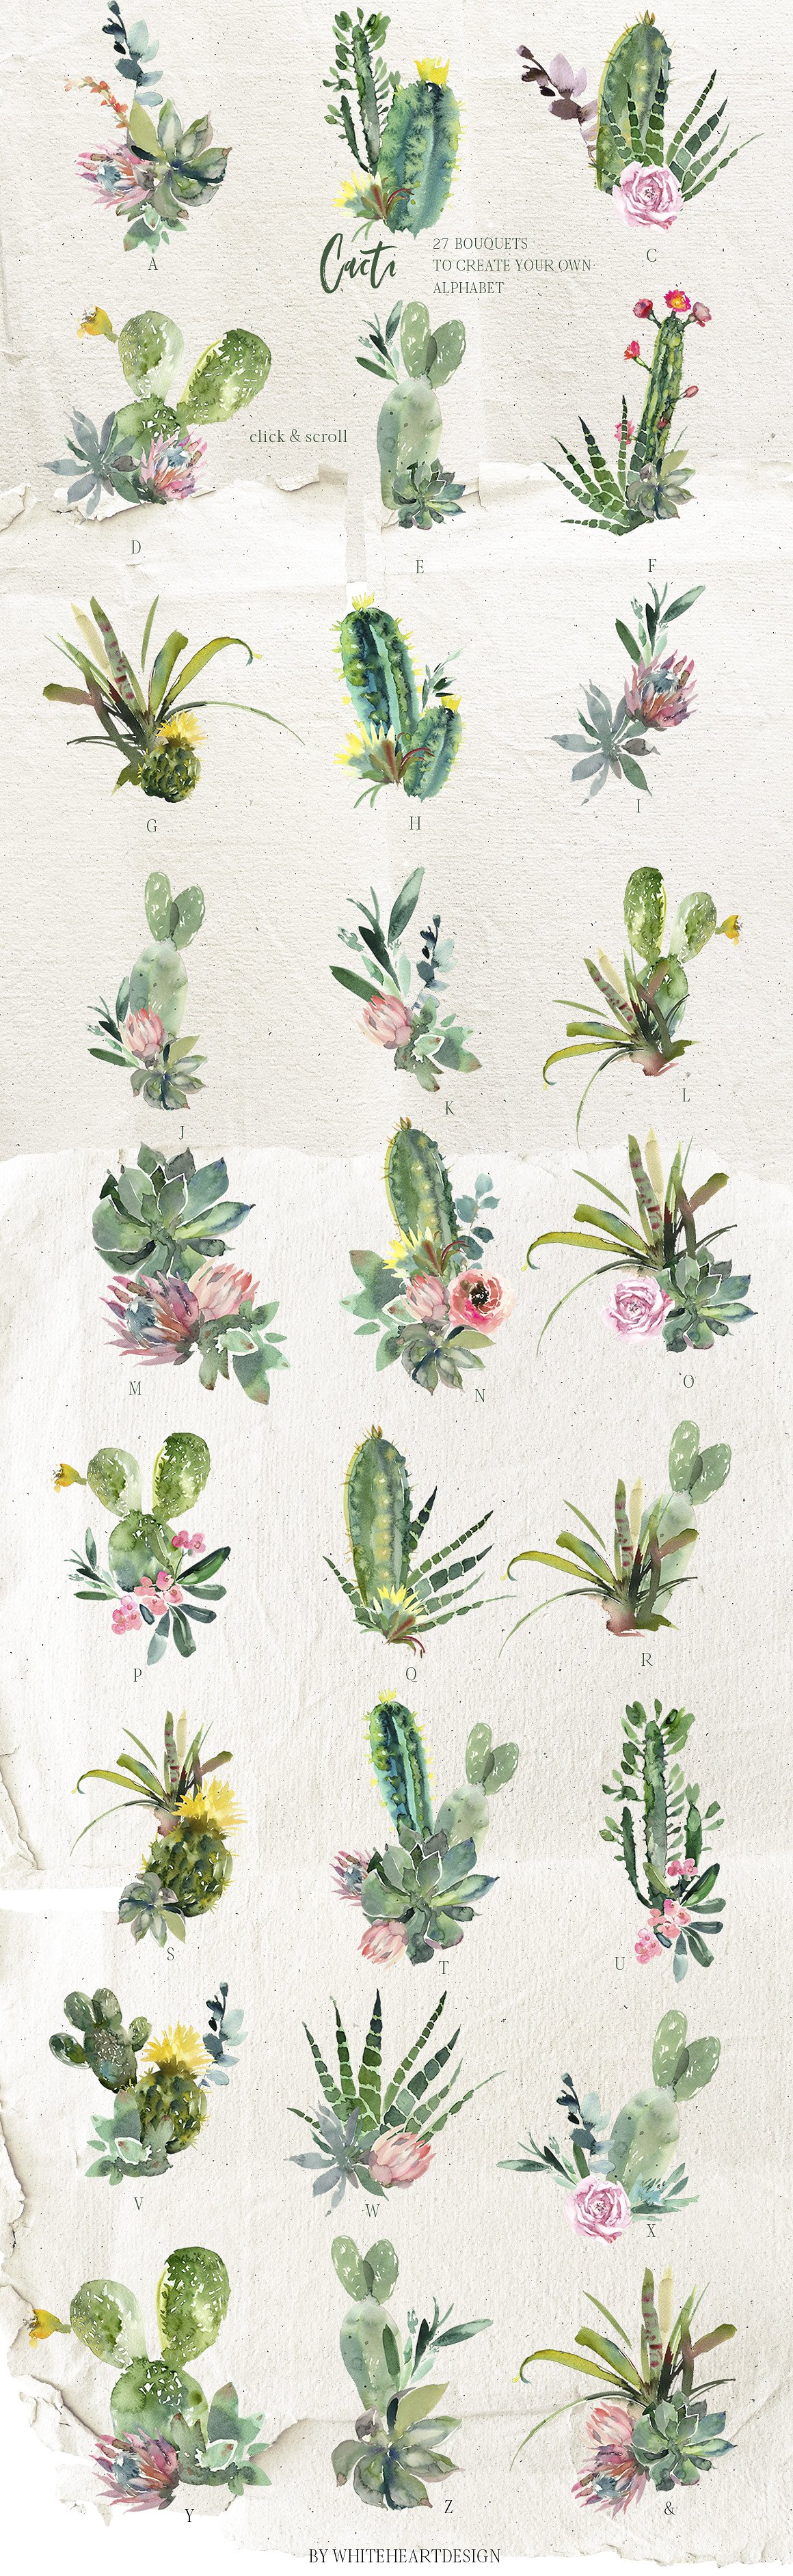 漂亮的手绘仙人掌多肉花卉PNG剪贴画集 Beautiful Hand-Painted Cactus Succulent Flower PNG Clip Art Set插图6